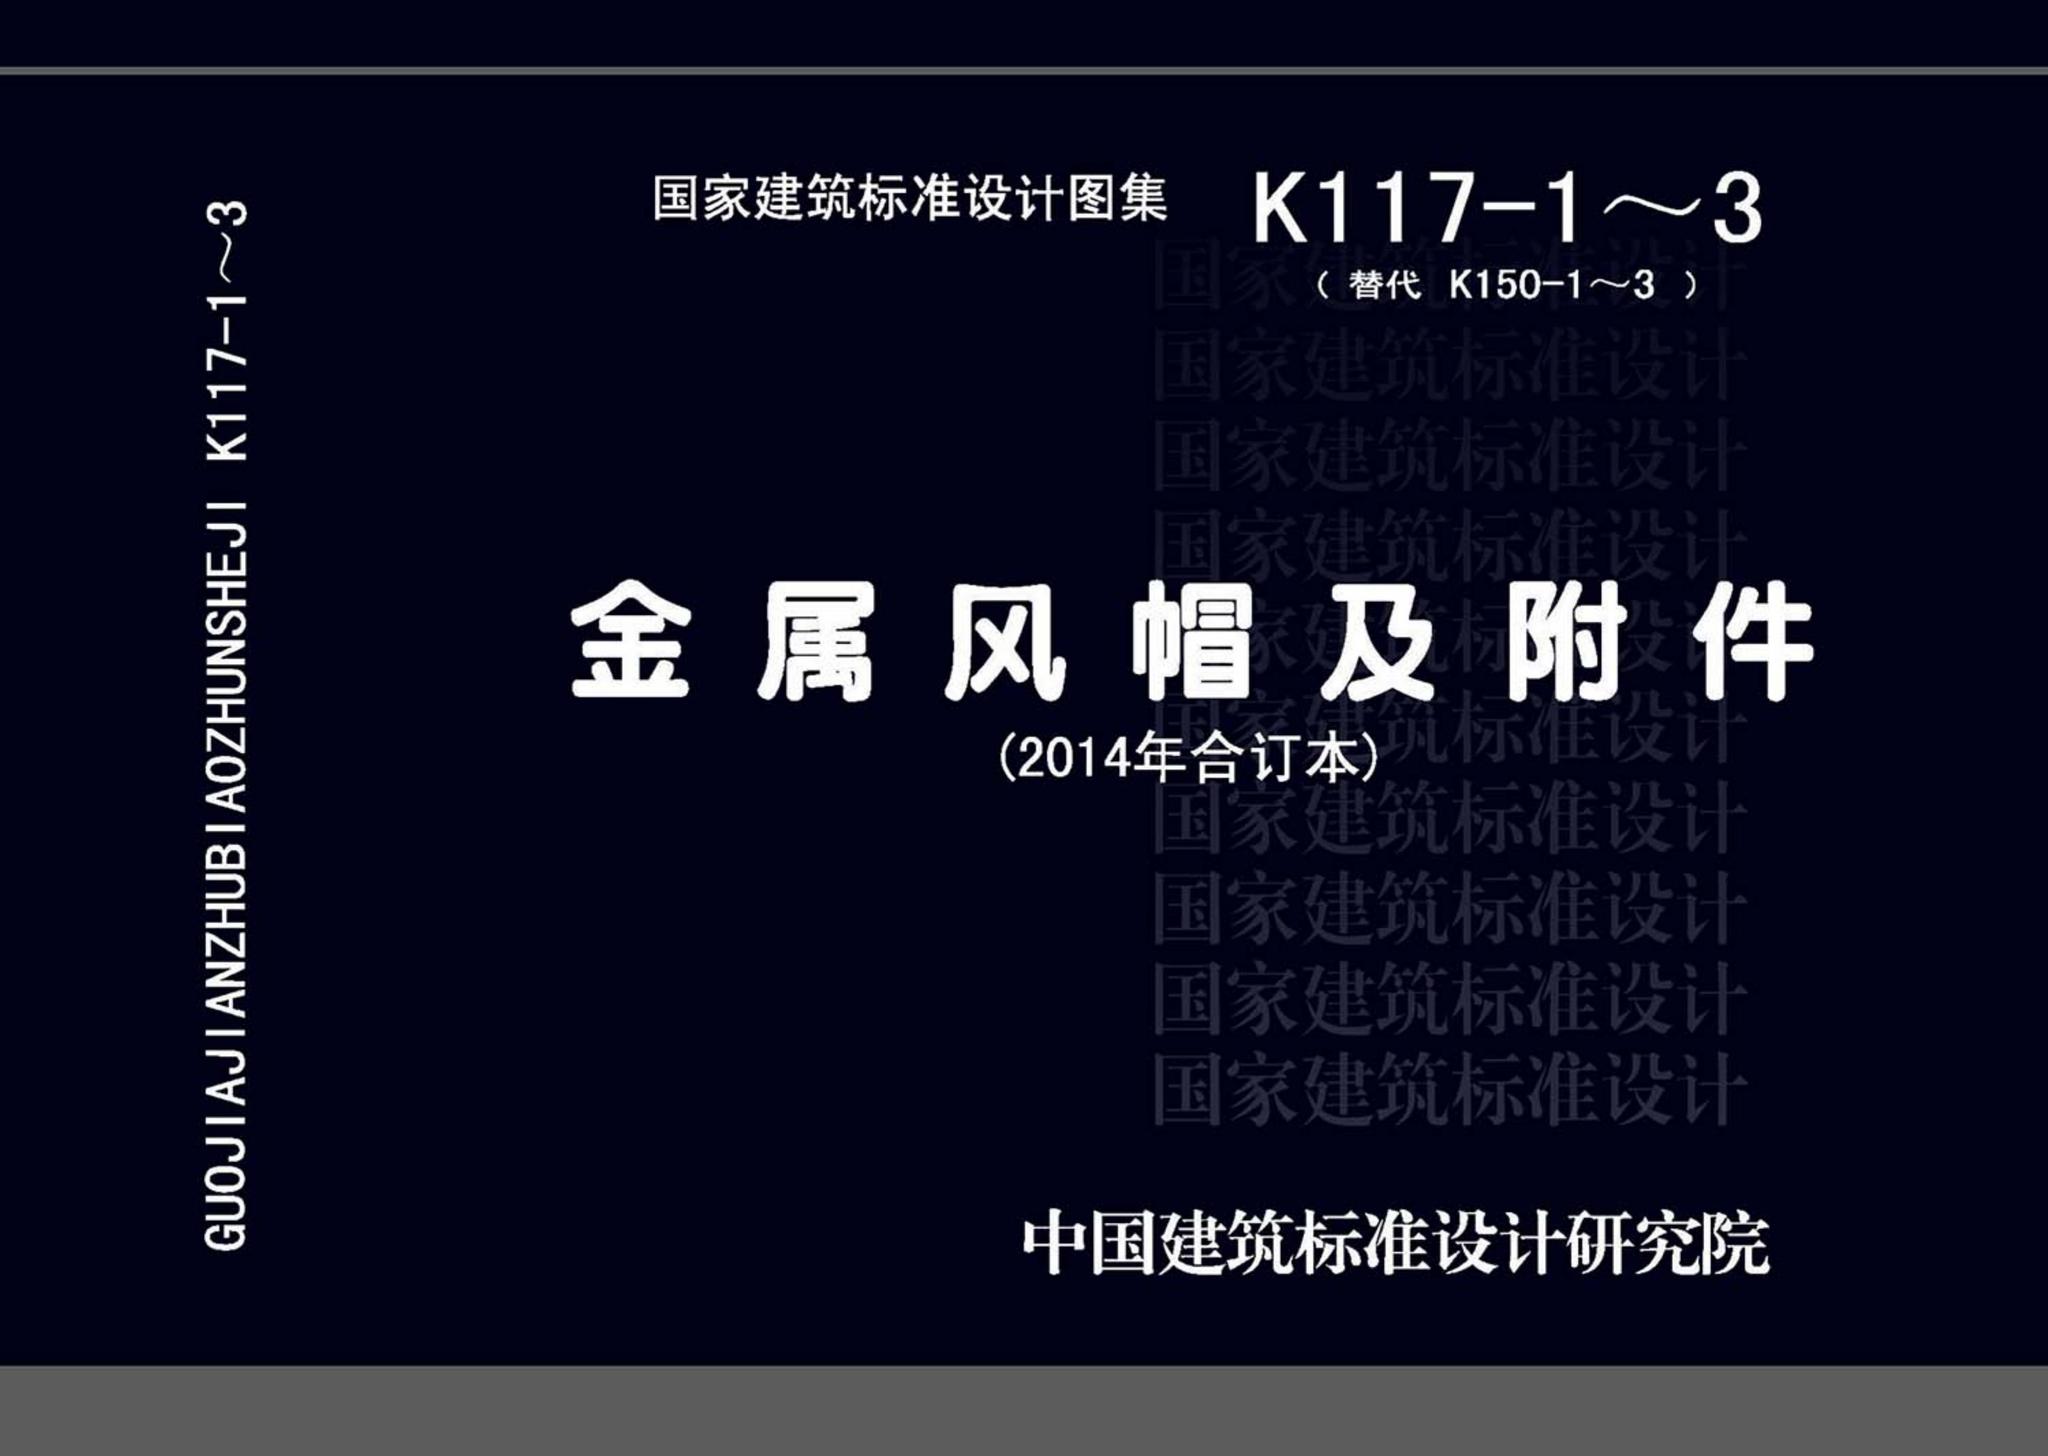 14K117-1~3 金属风帽及附件 (2014年合订本)